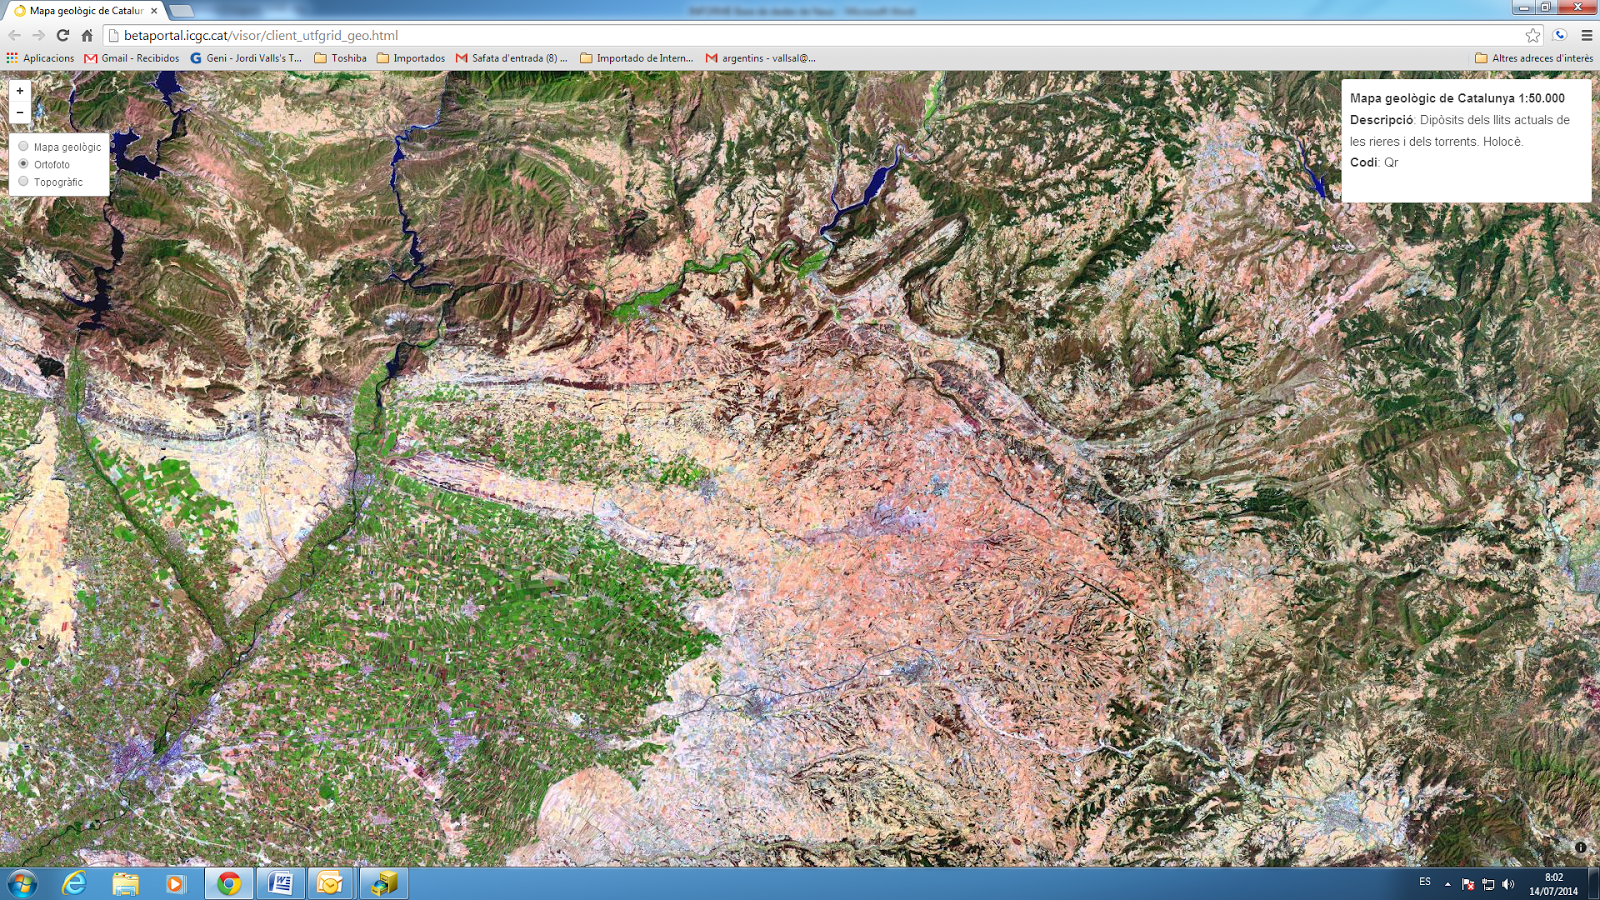 Mapa del dia: Mapa geològic de Catalunya 1:50.000